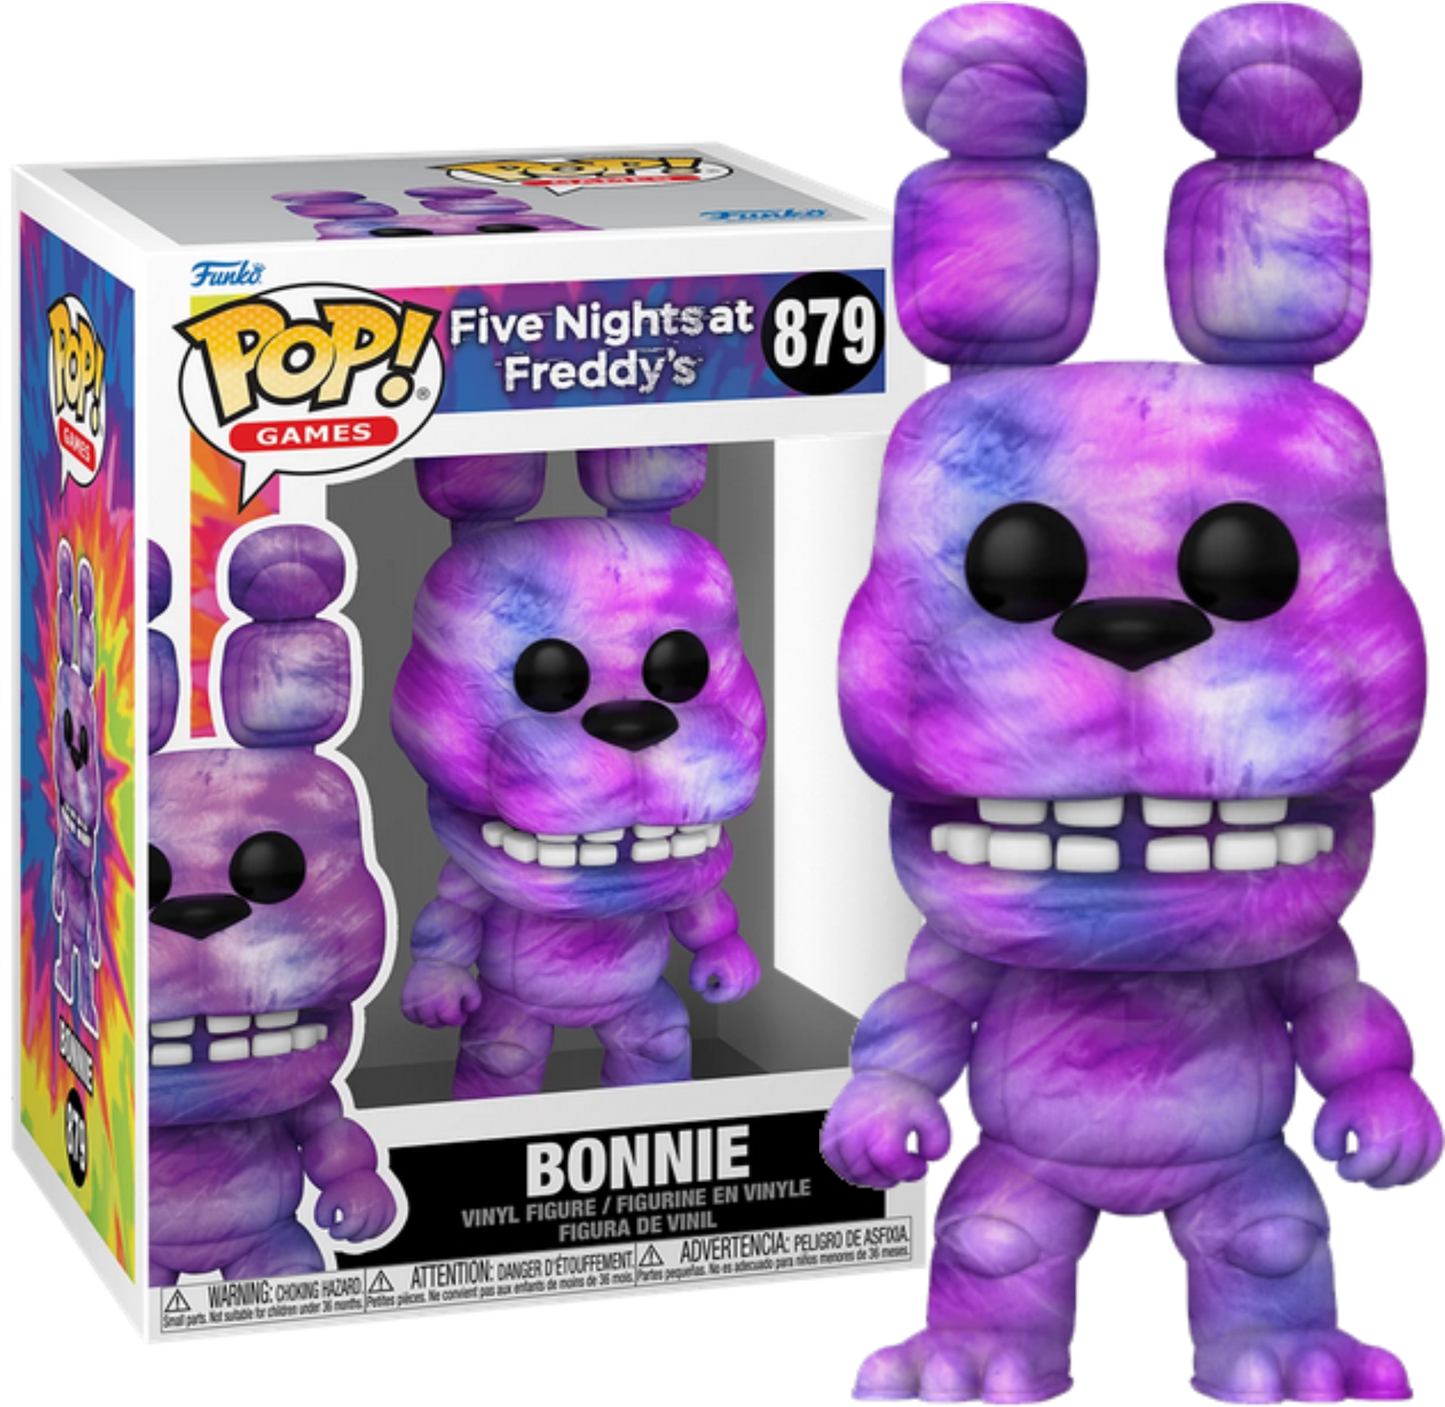 Five Nights at Freddy’s Funko Pop! Vinyl Tie-Dye Bonnie Figure